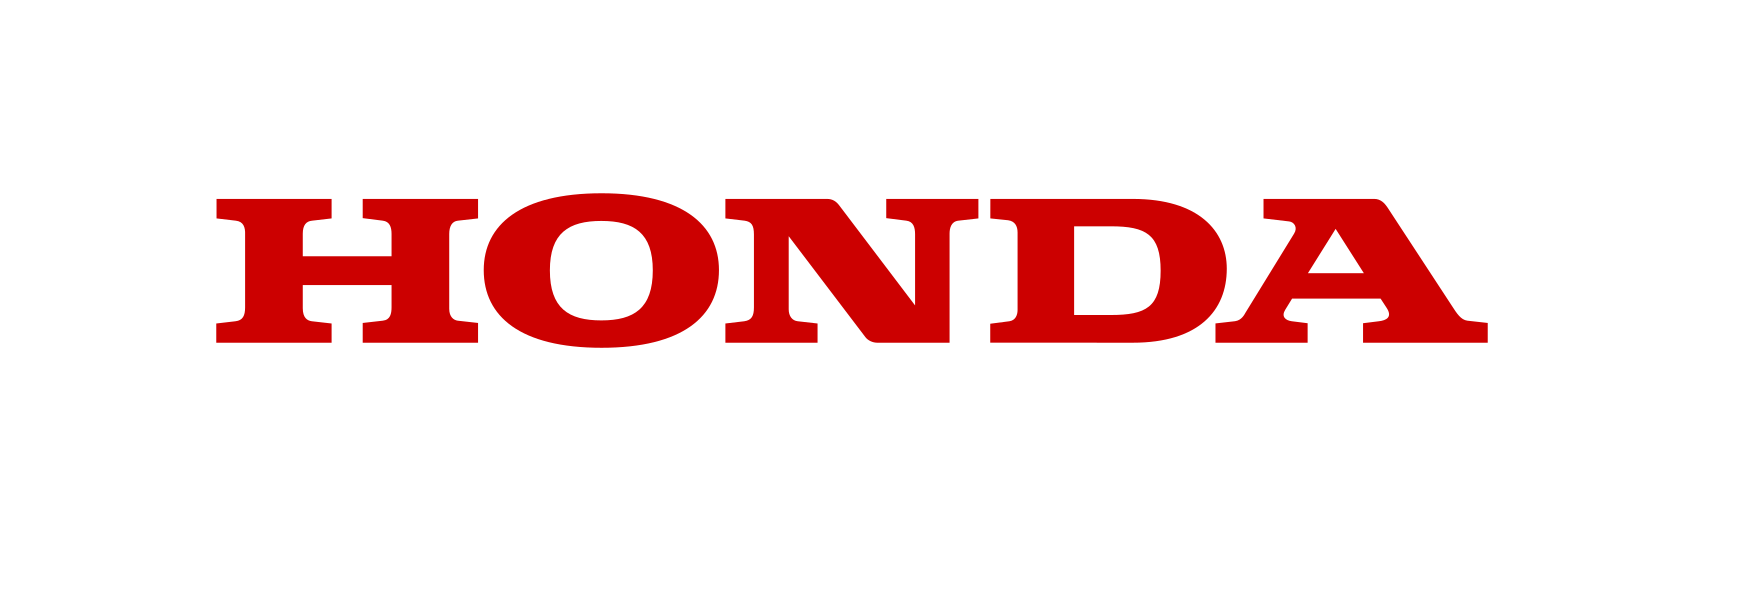 Honda_logo.svg-2